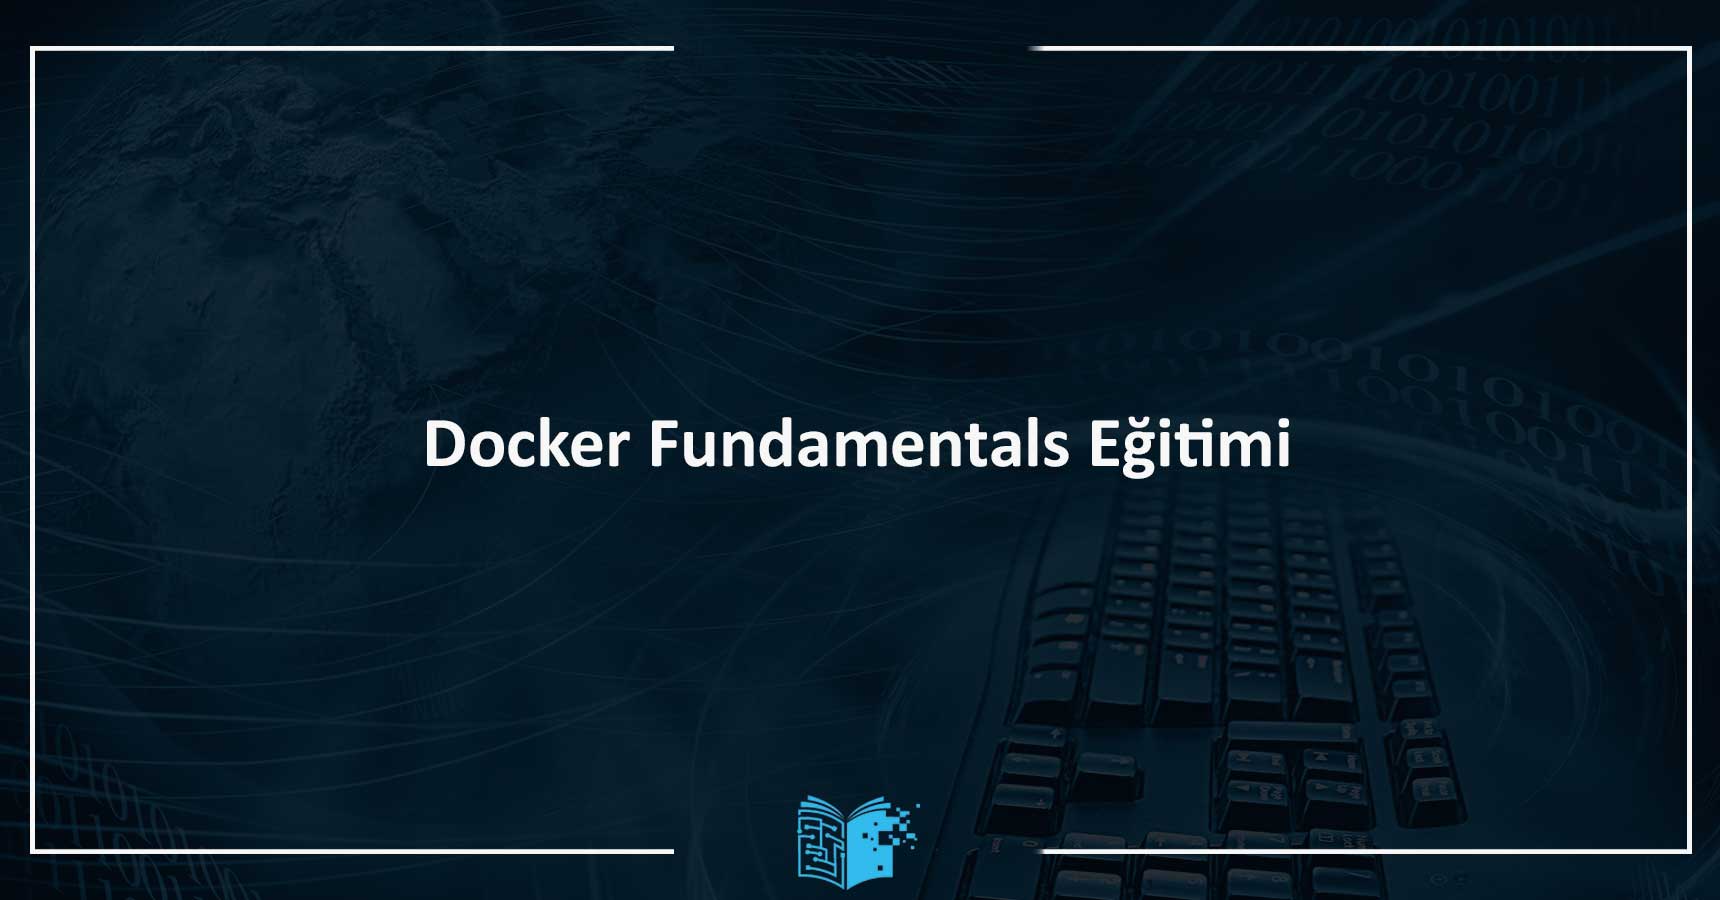 Docker Fundamentals Eğitimi